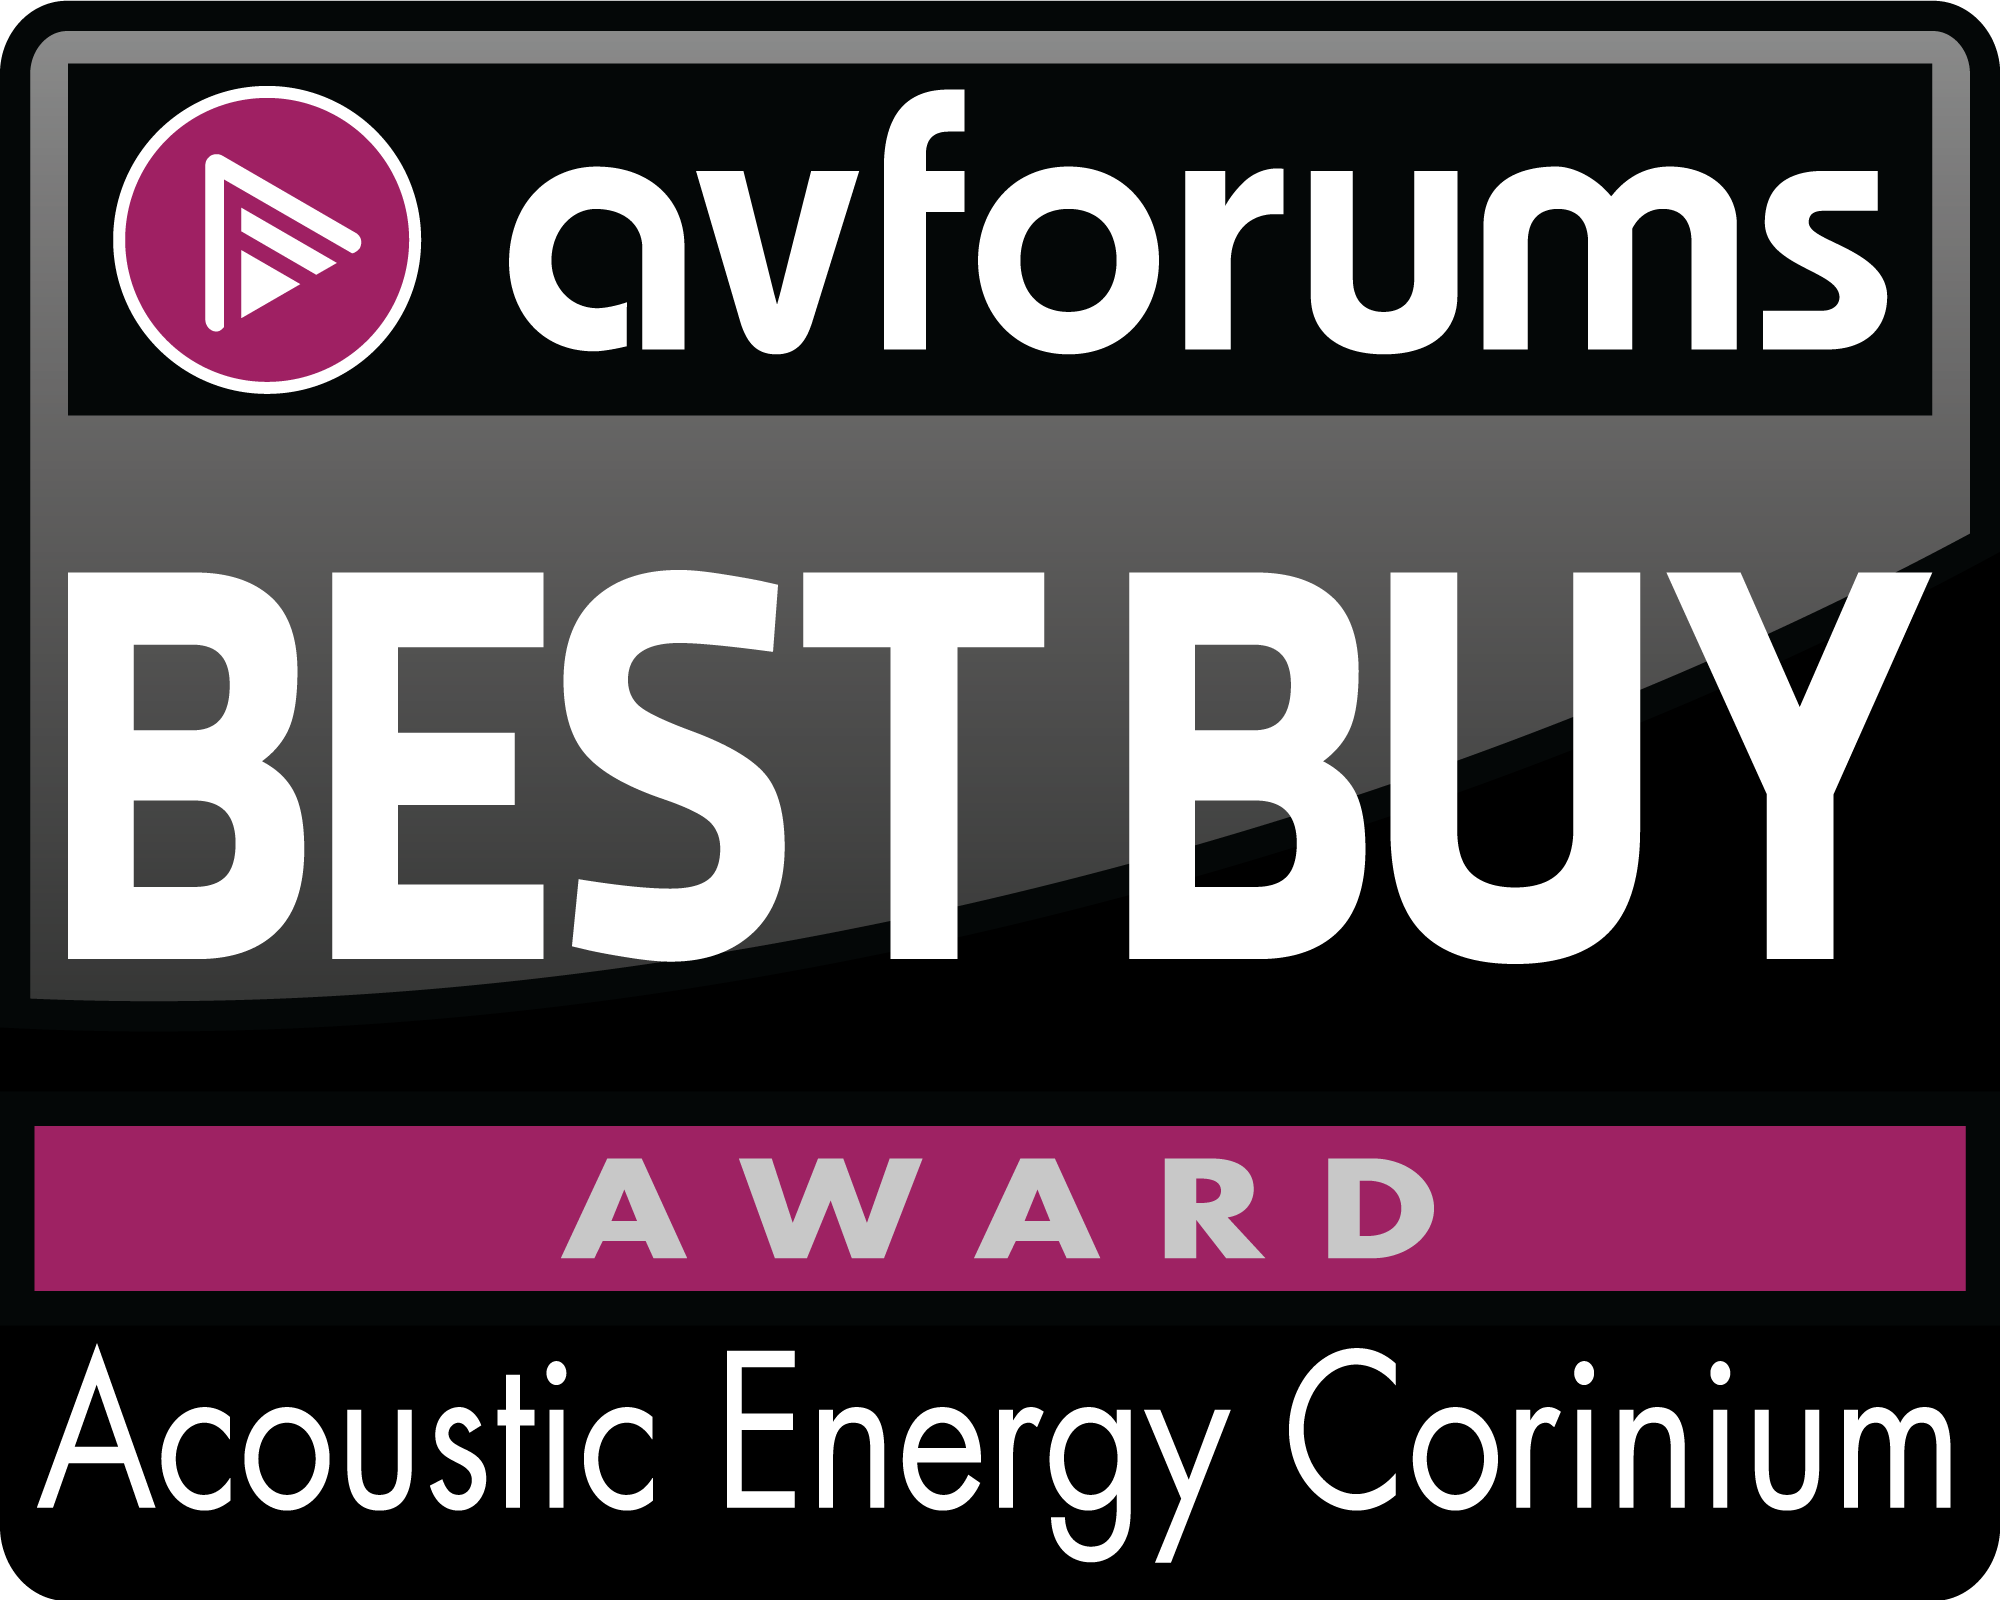 AVForums Best Buy (Corinium)